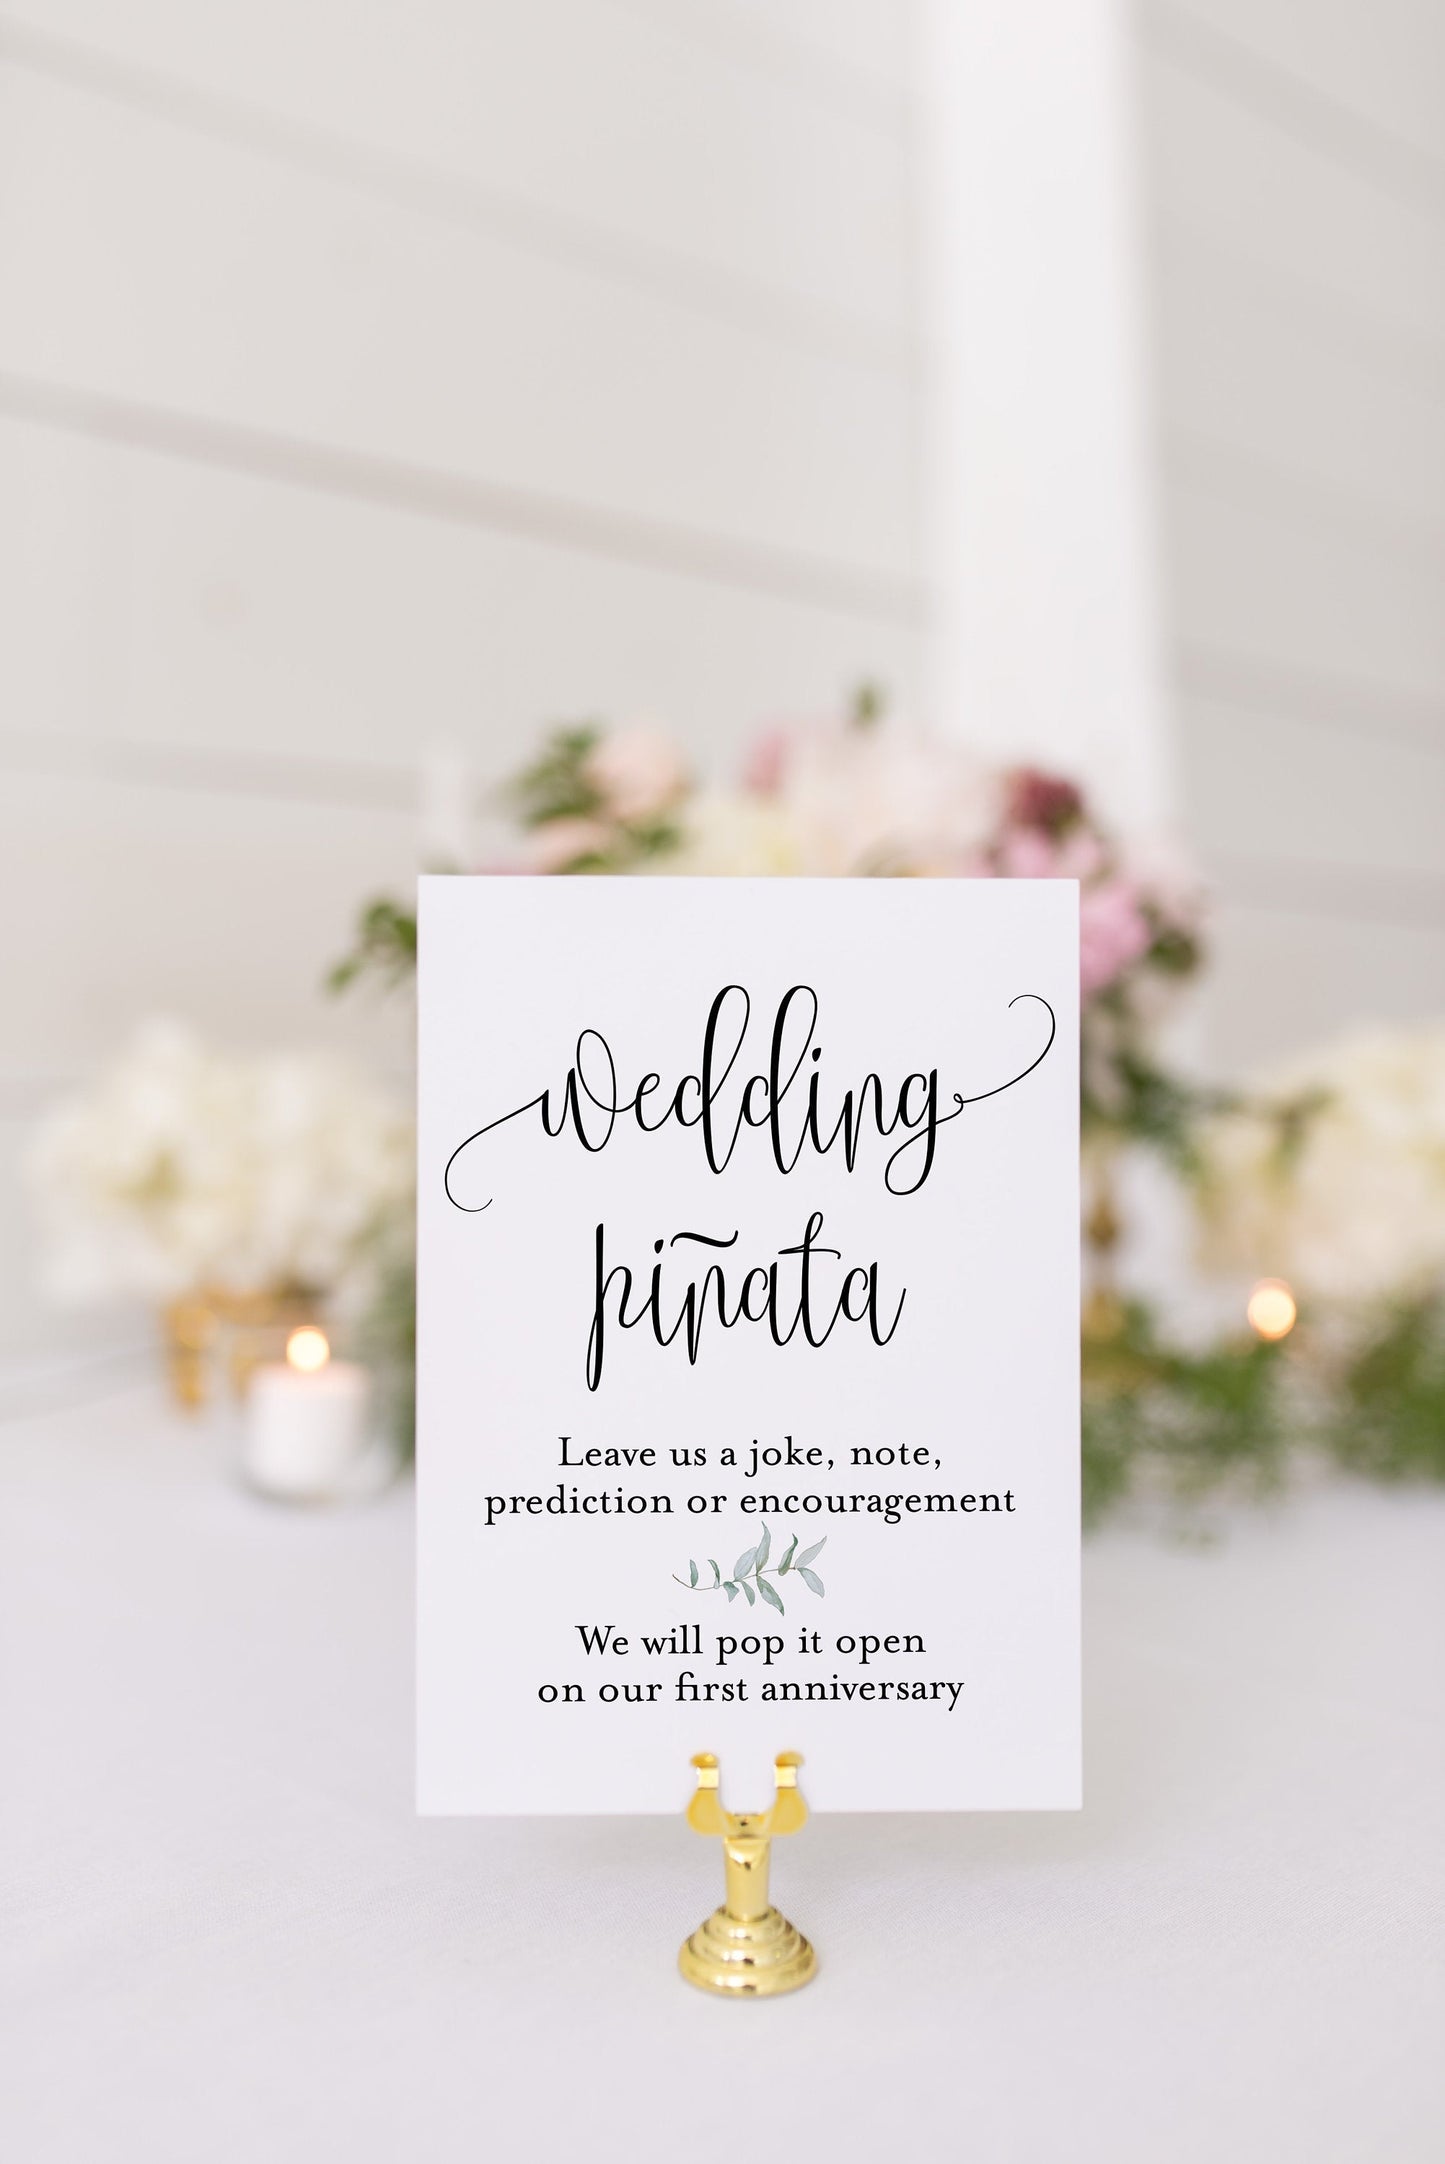 Wedding pinata sign guest book sign Pinata Wedding guest book sign printable Greenery wedding signs - Melissa SIGNS | PHOTO BOOTH SAVVY PAPER CO